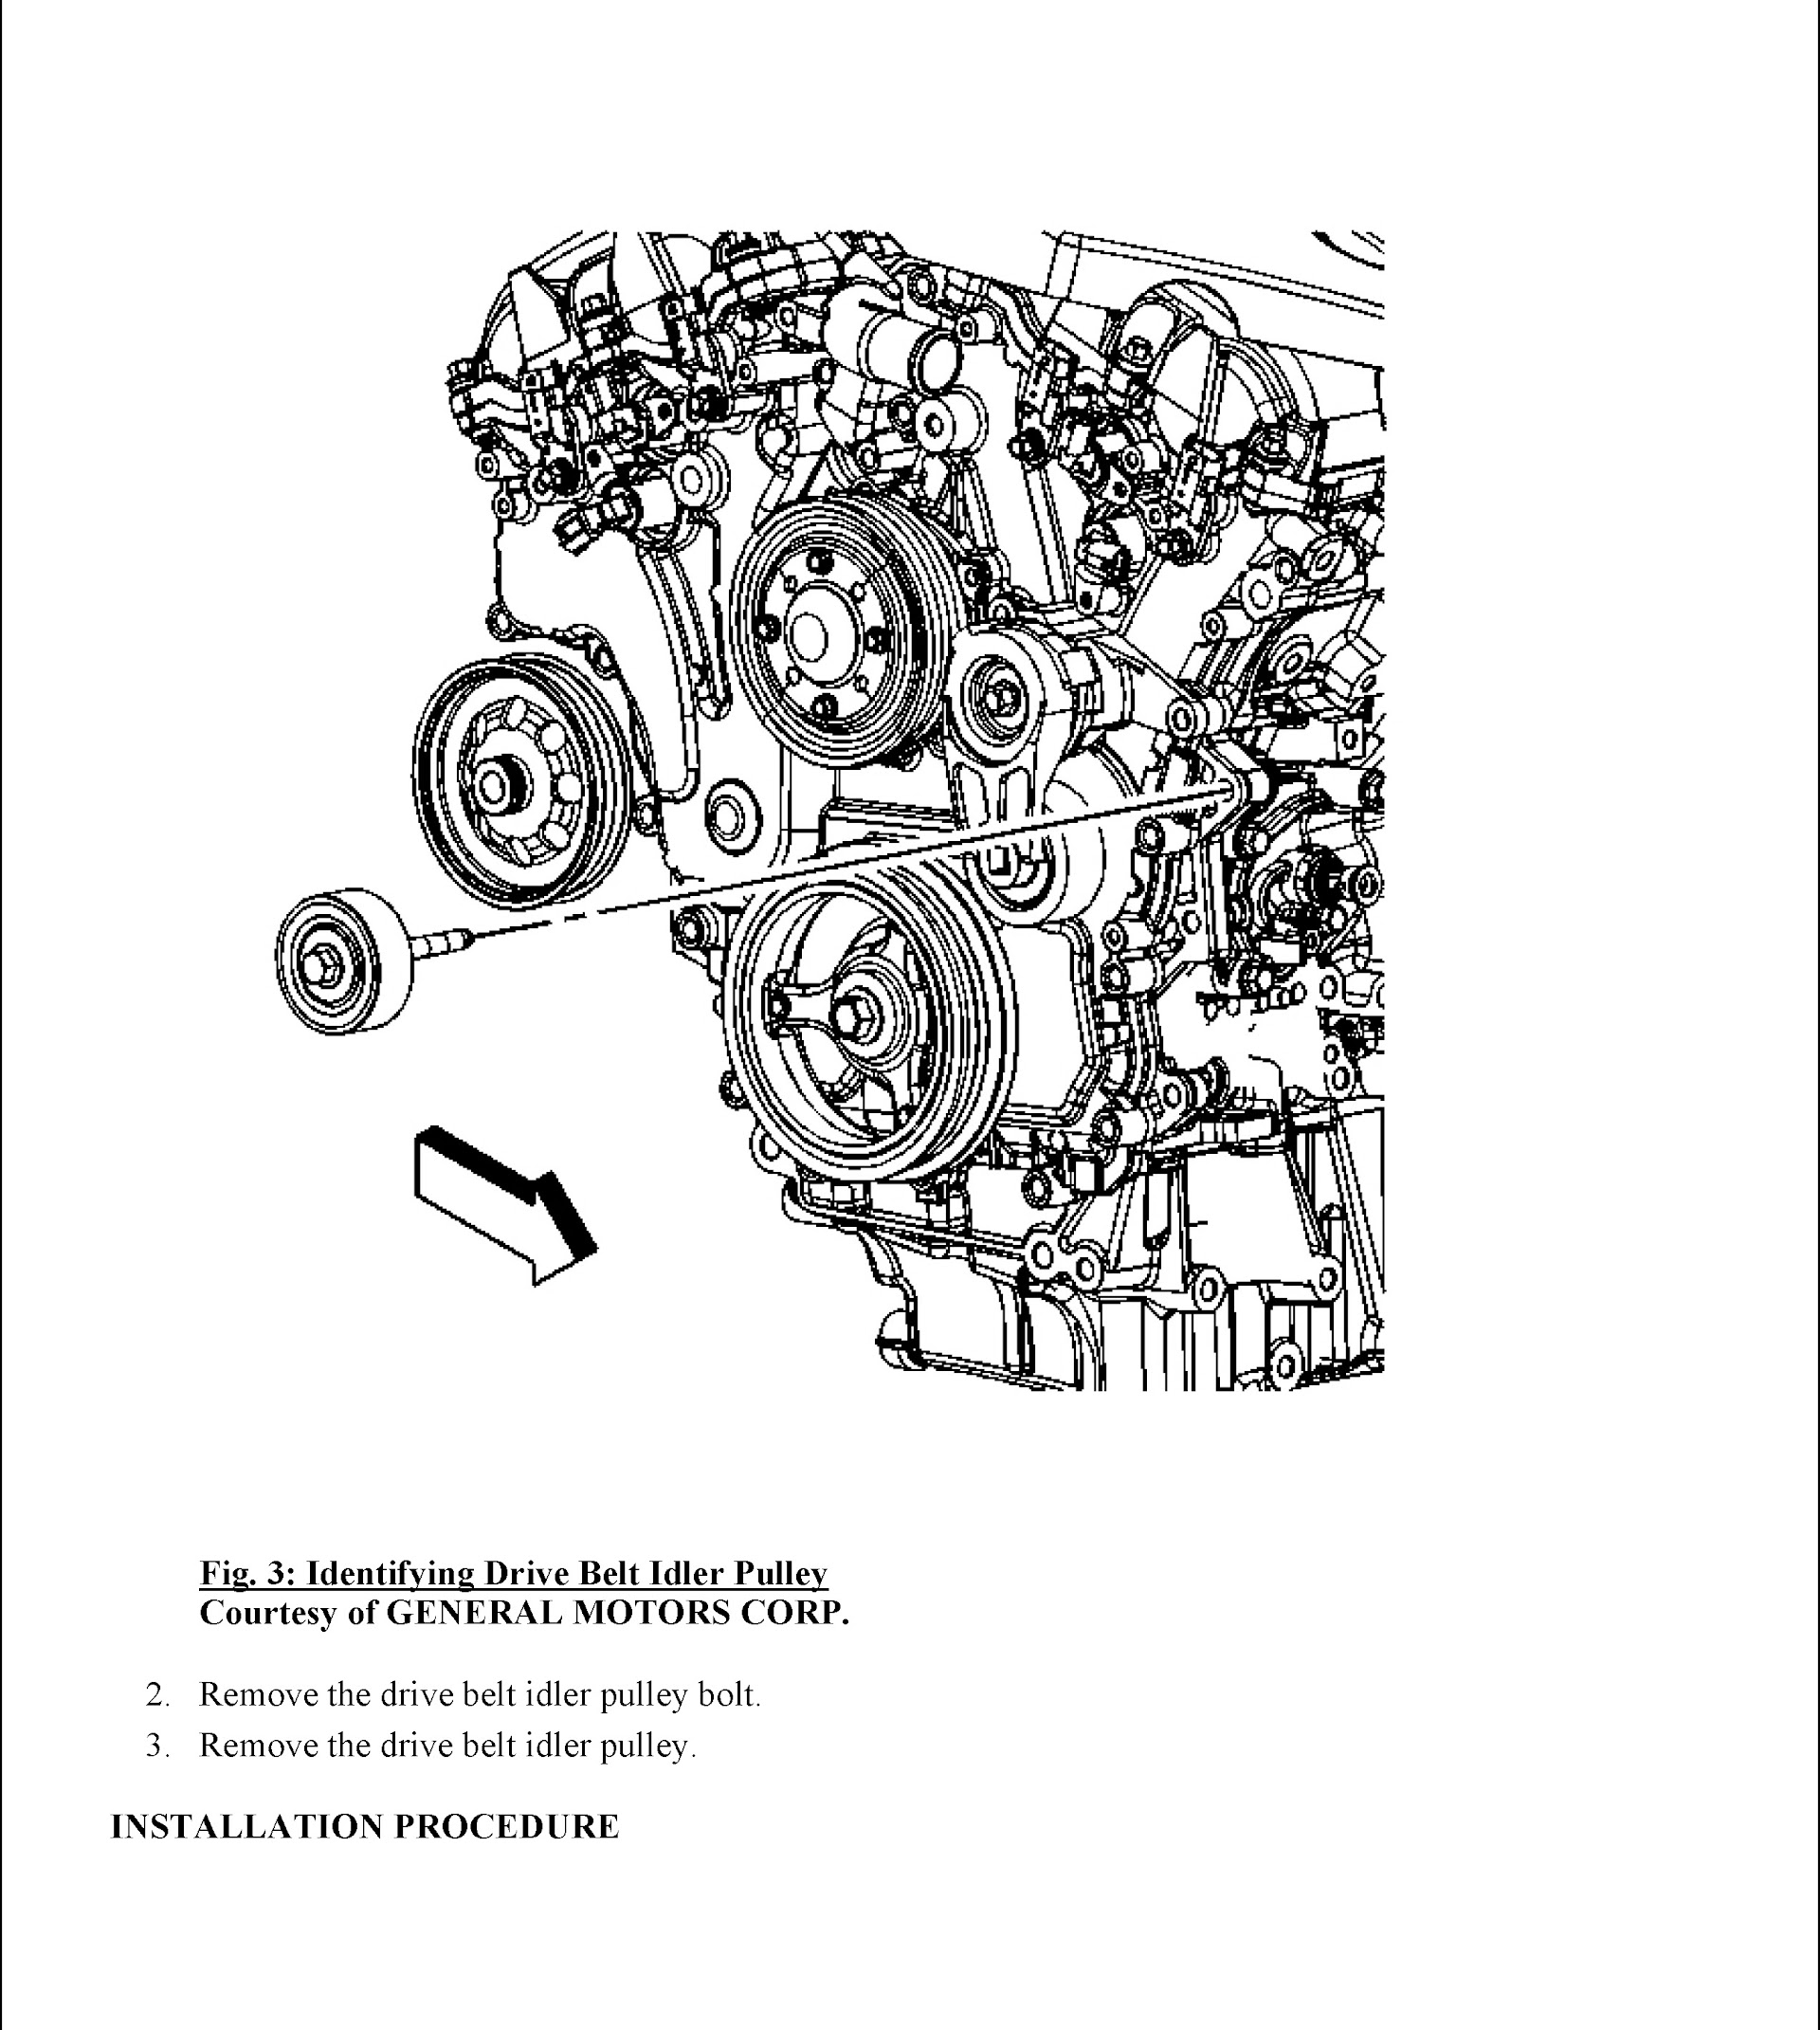 CONTENTS: 2010-2012 Chevrolet Equinox Repair Manual and GMC Terrain, Drive belt Idler Pulley